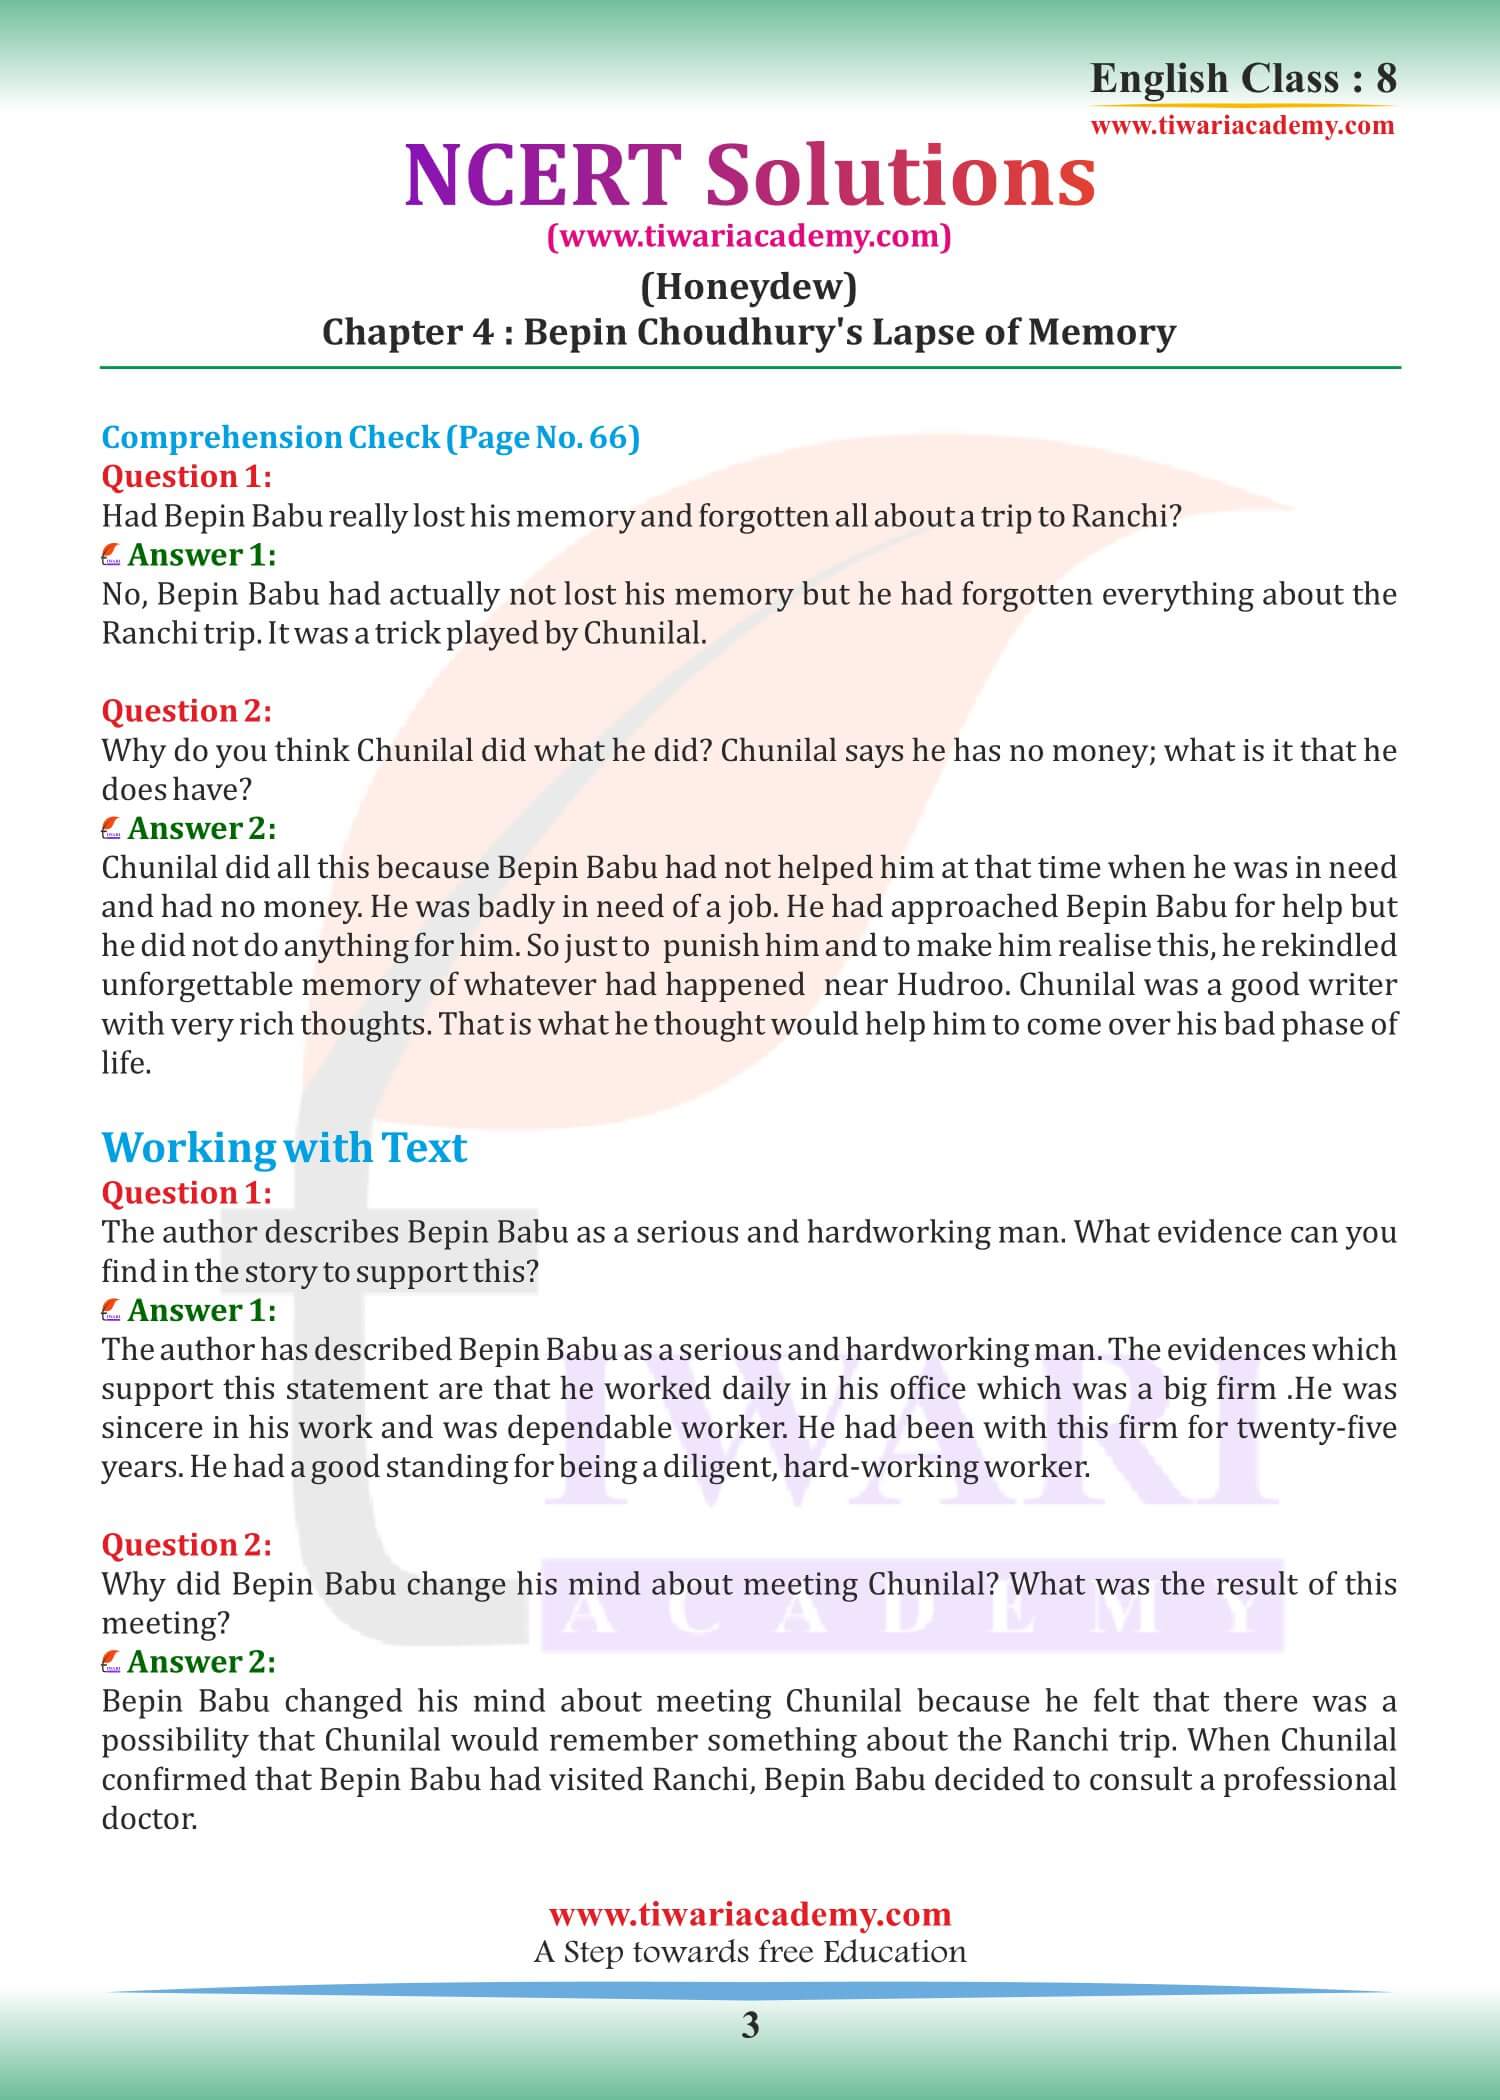 Class 8 English Honeydew Chapter 4 Bepin Chaudhury